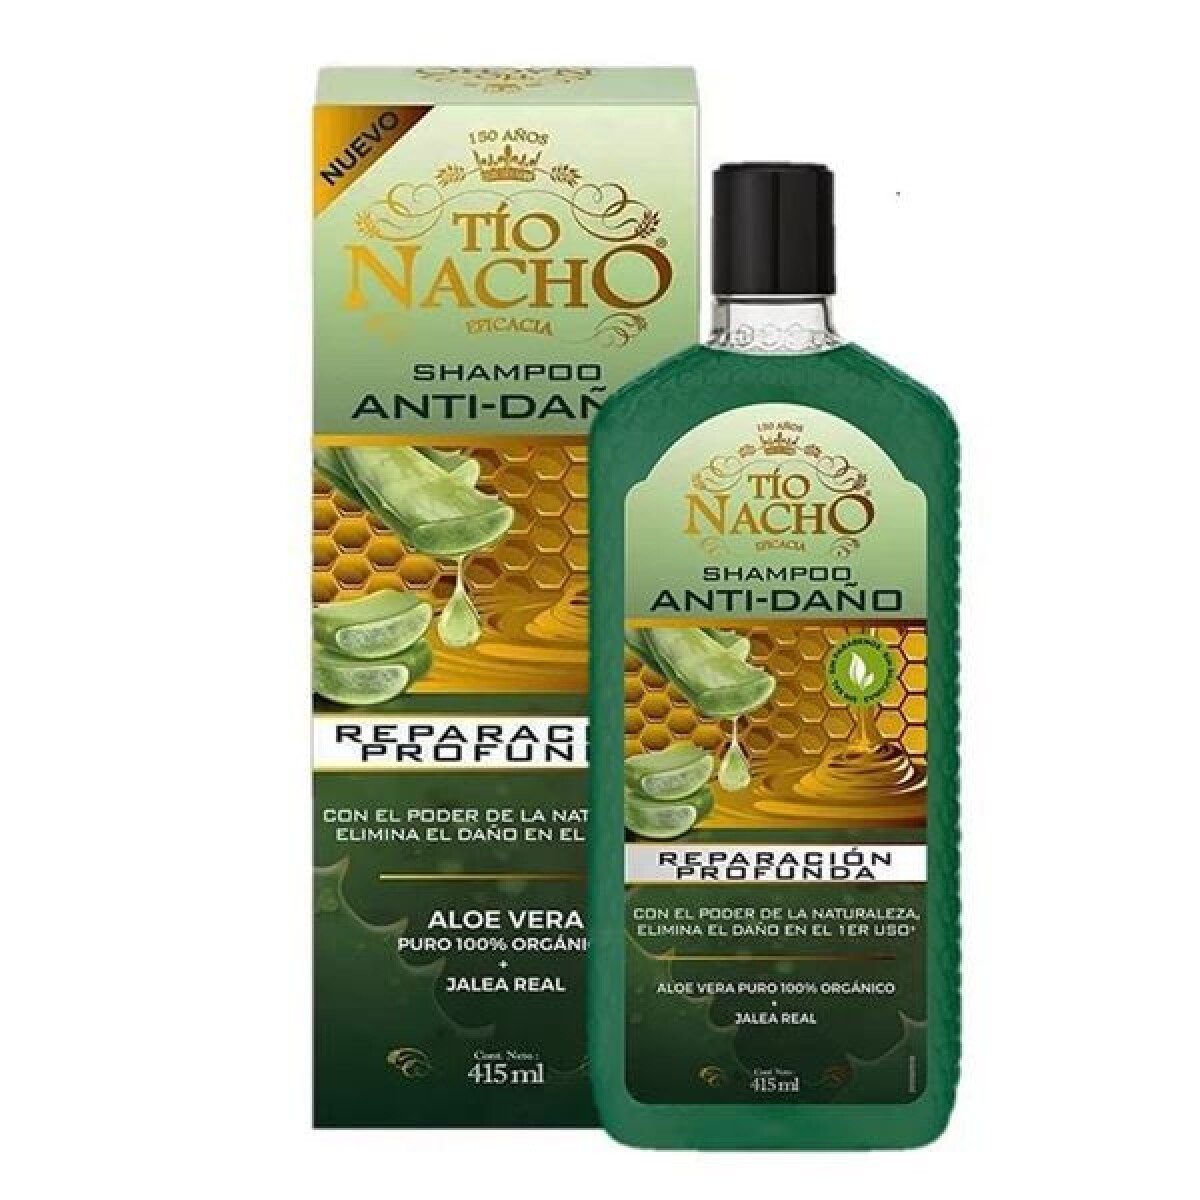 Shampoo Aloe Vera Anti Daño Tio Nacho 415 ml 